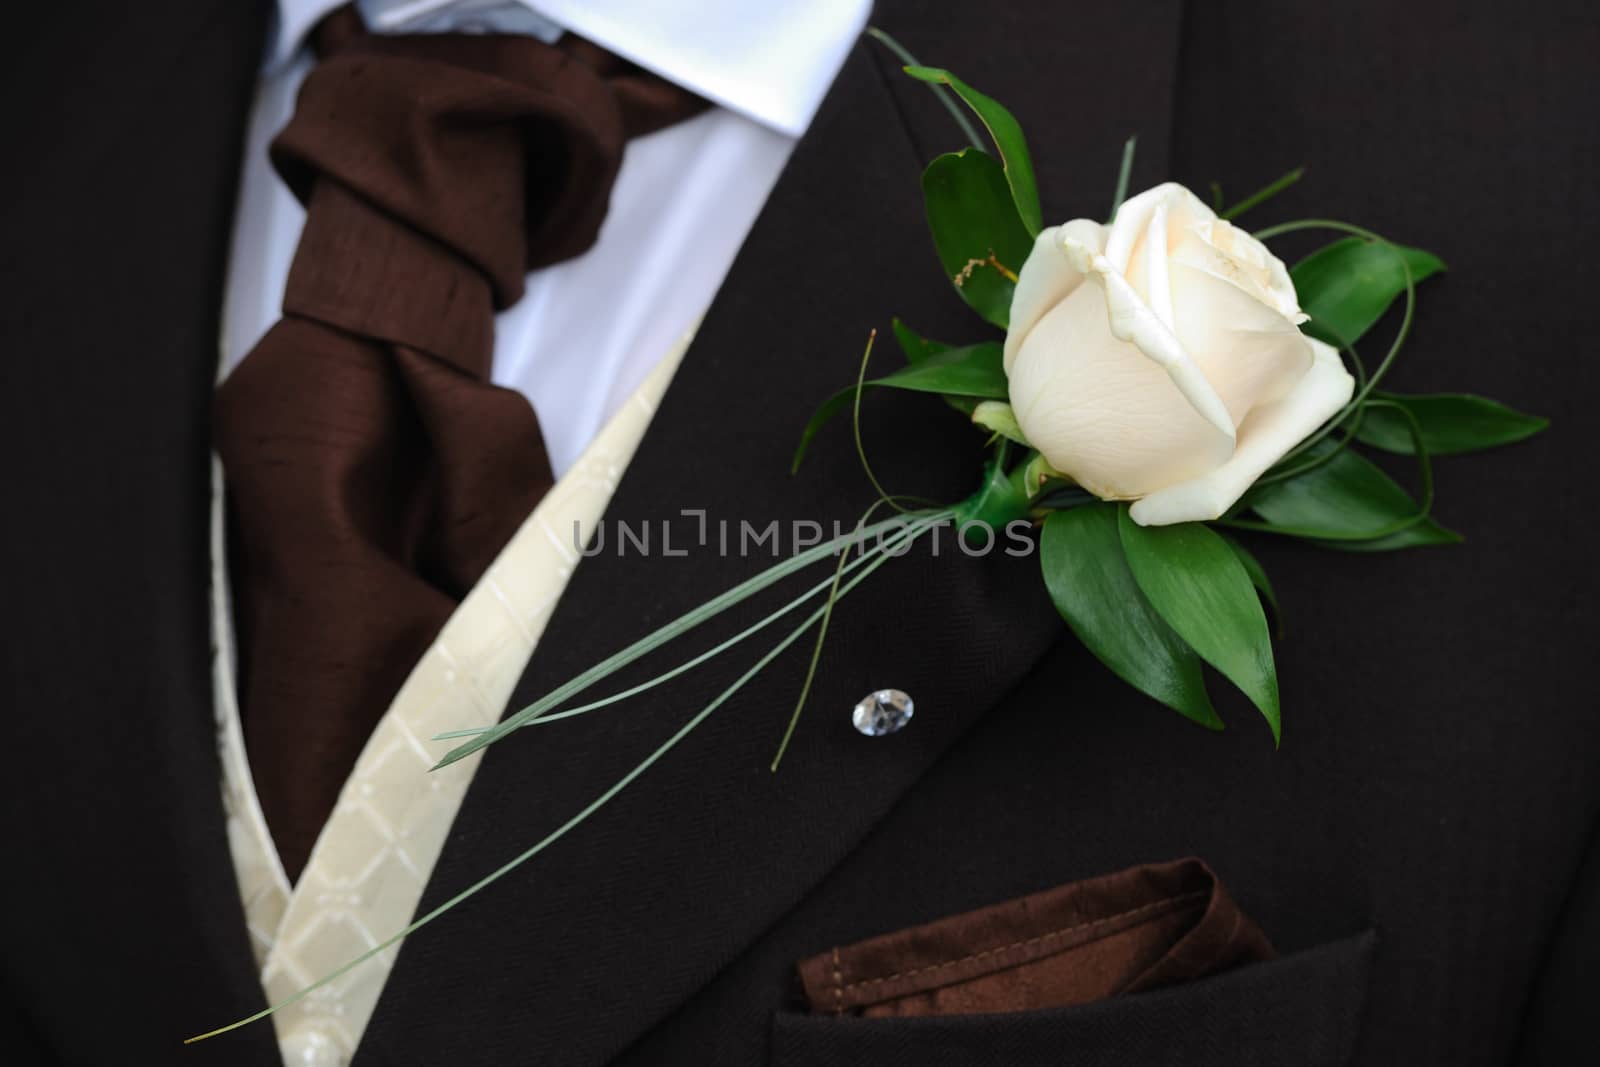 Closeup of grooms rose and cravat.